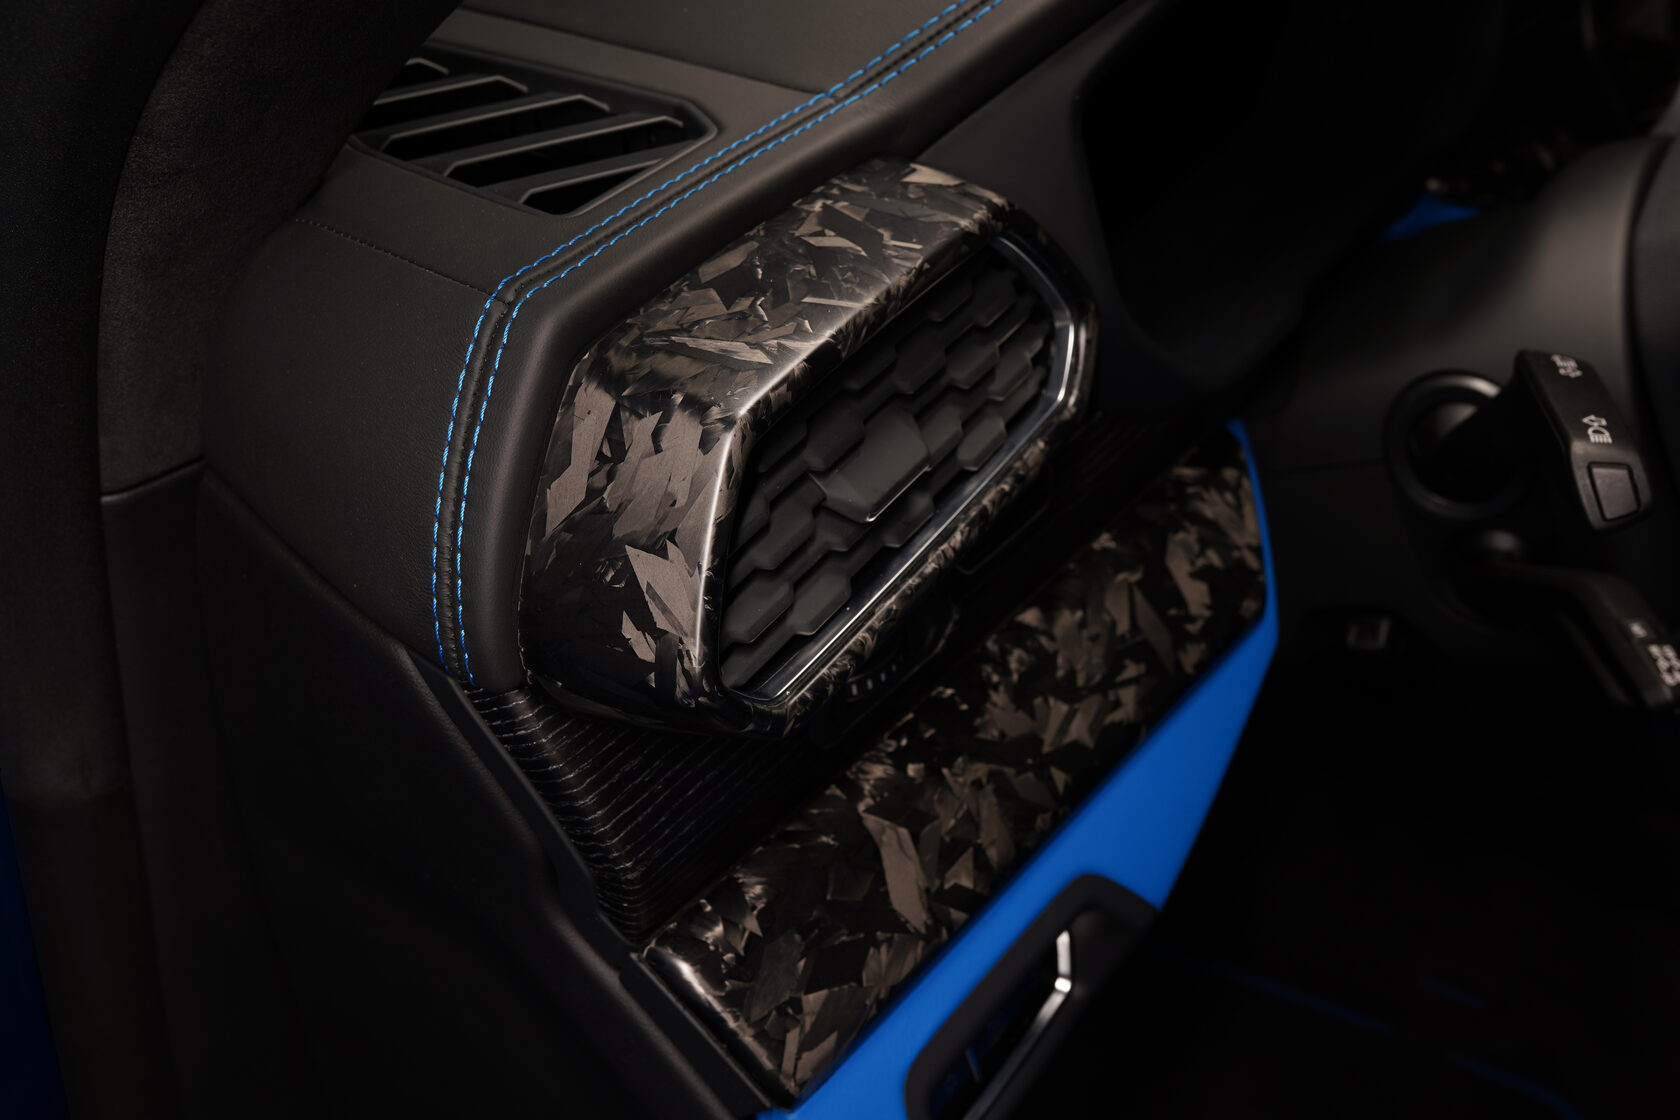 Check price and buy Сarbon Fiber Body kit set for Lamborghini Urus